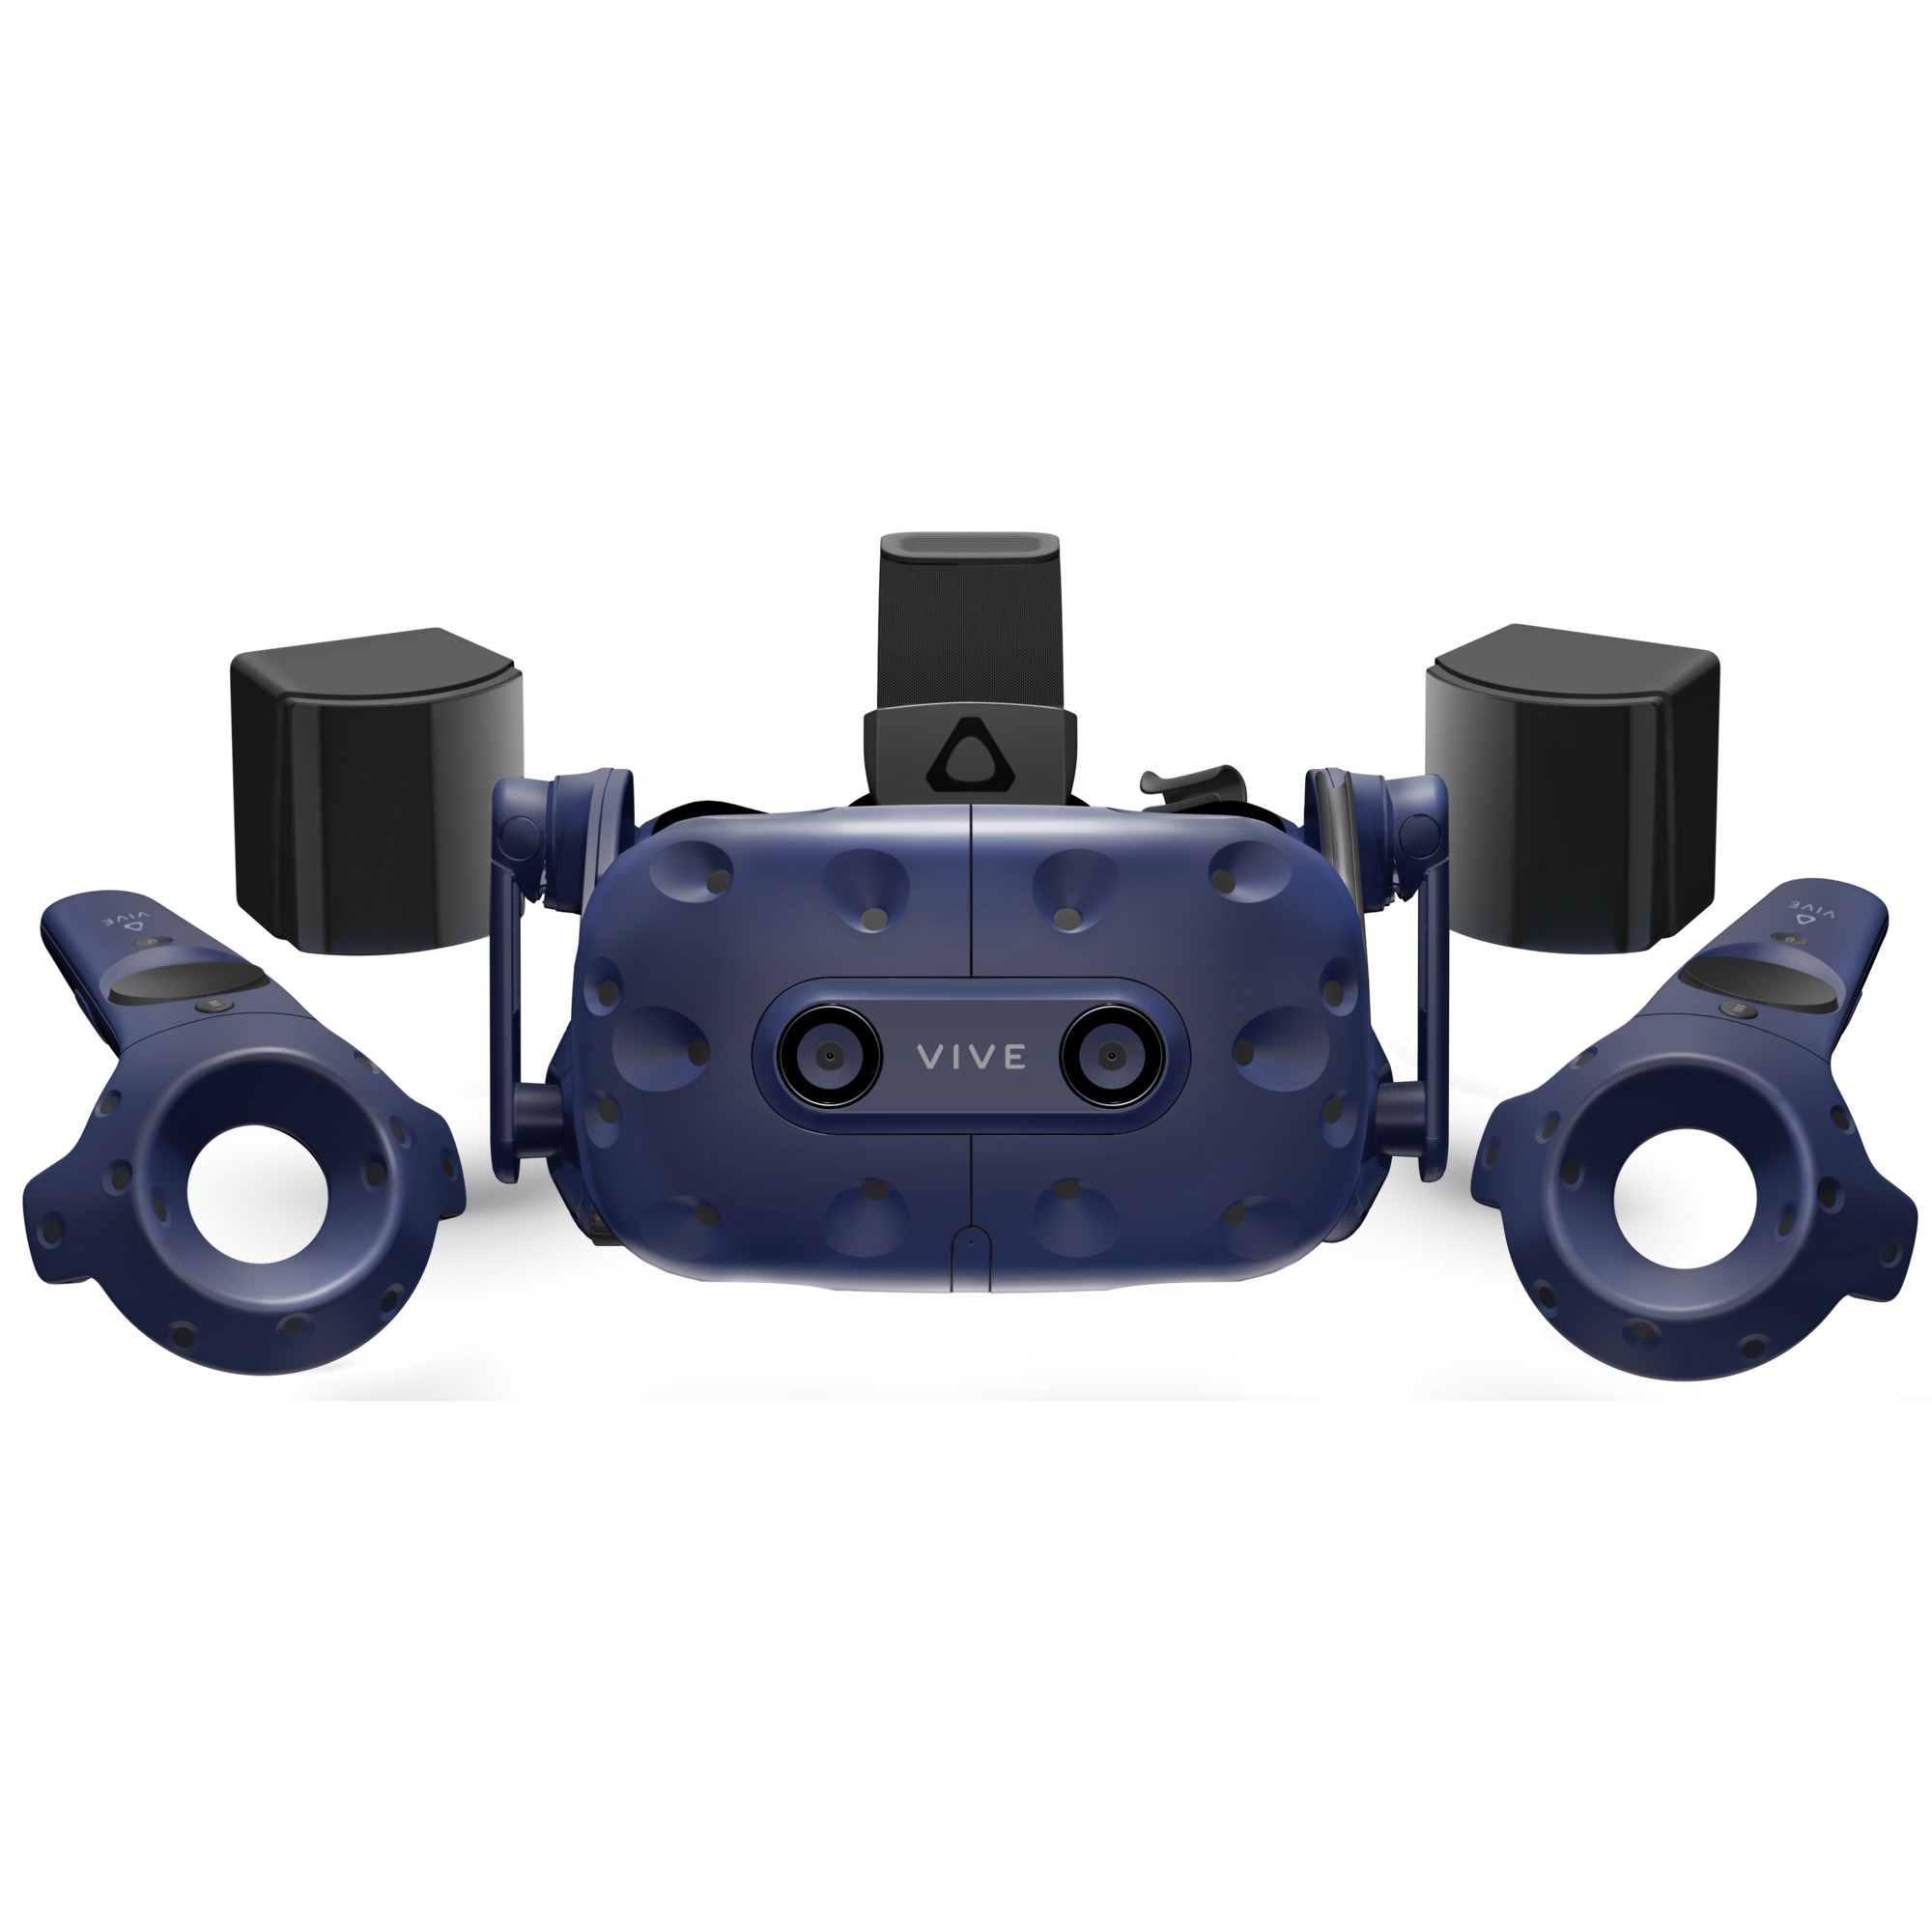 Image of Alternate - Vive Pro Full Kit, VR-Brille online einkaufen bei Alternate